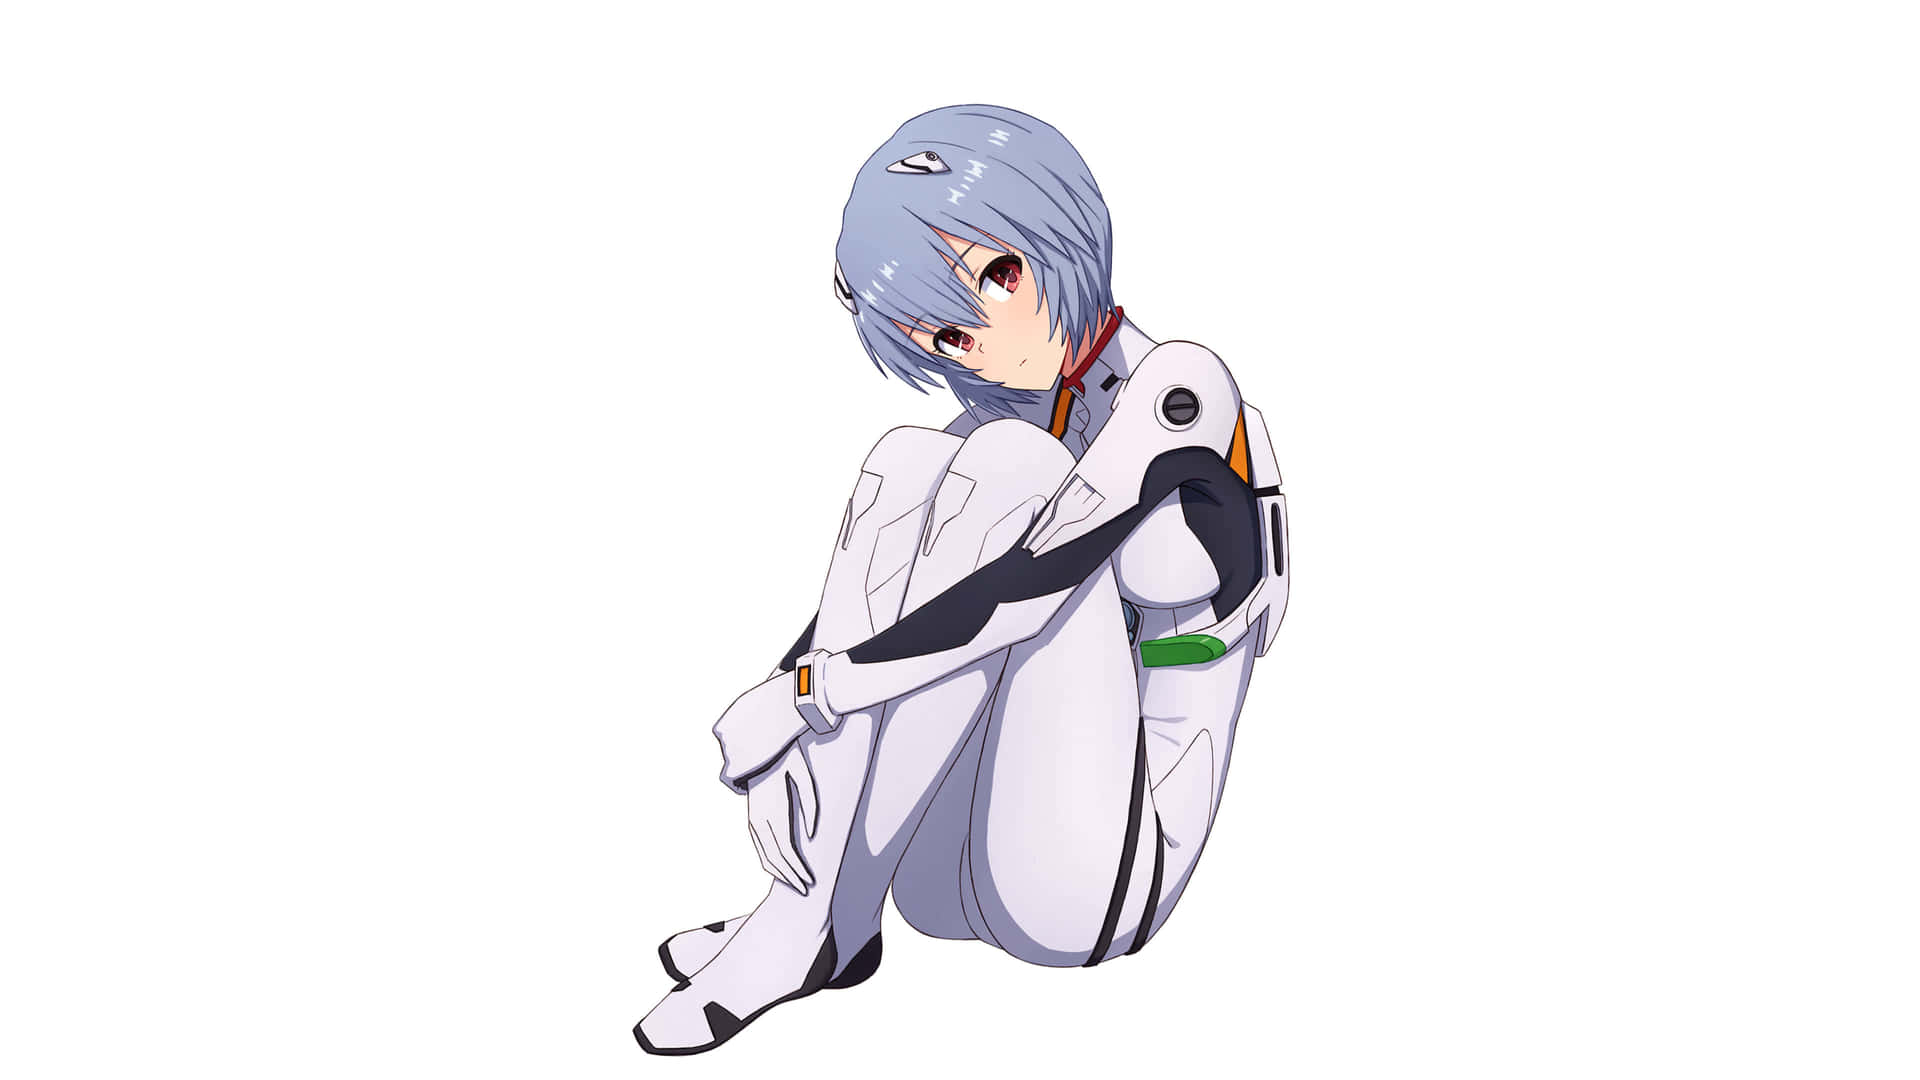 Rei Ayanami - The Enigmatic Pilot Of Evangelion Unit-00